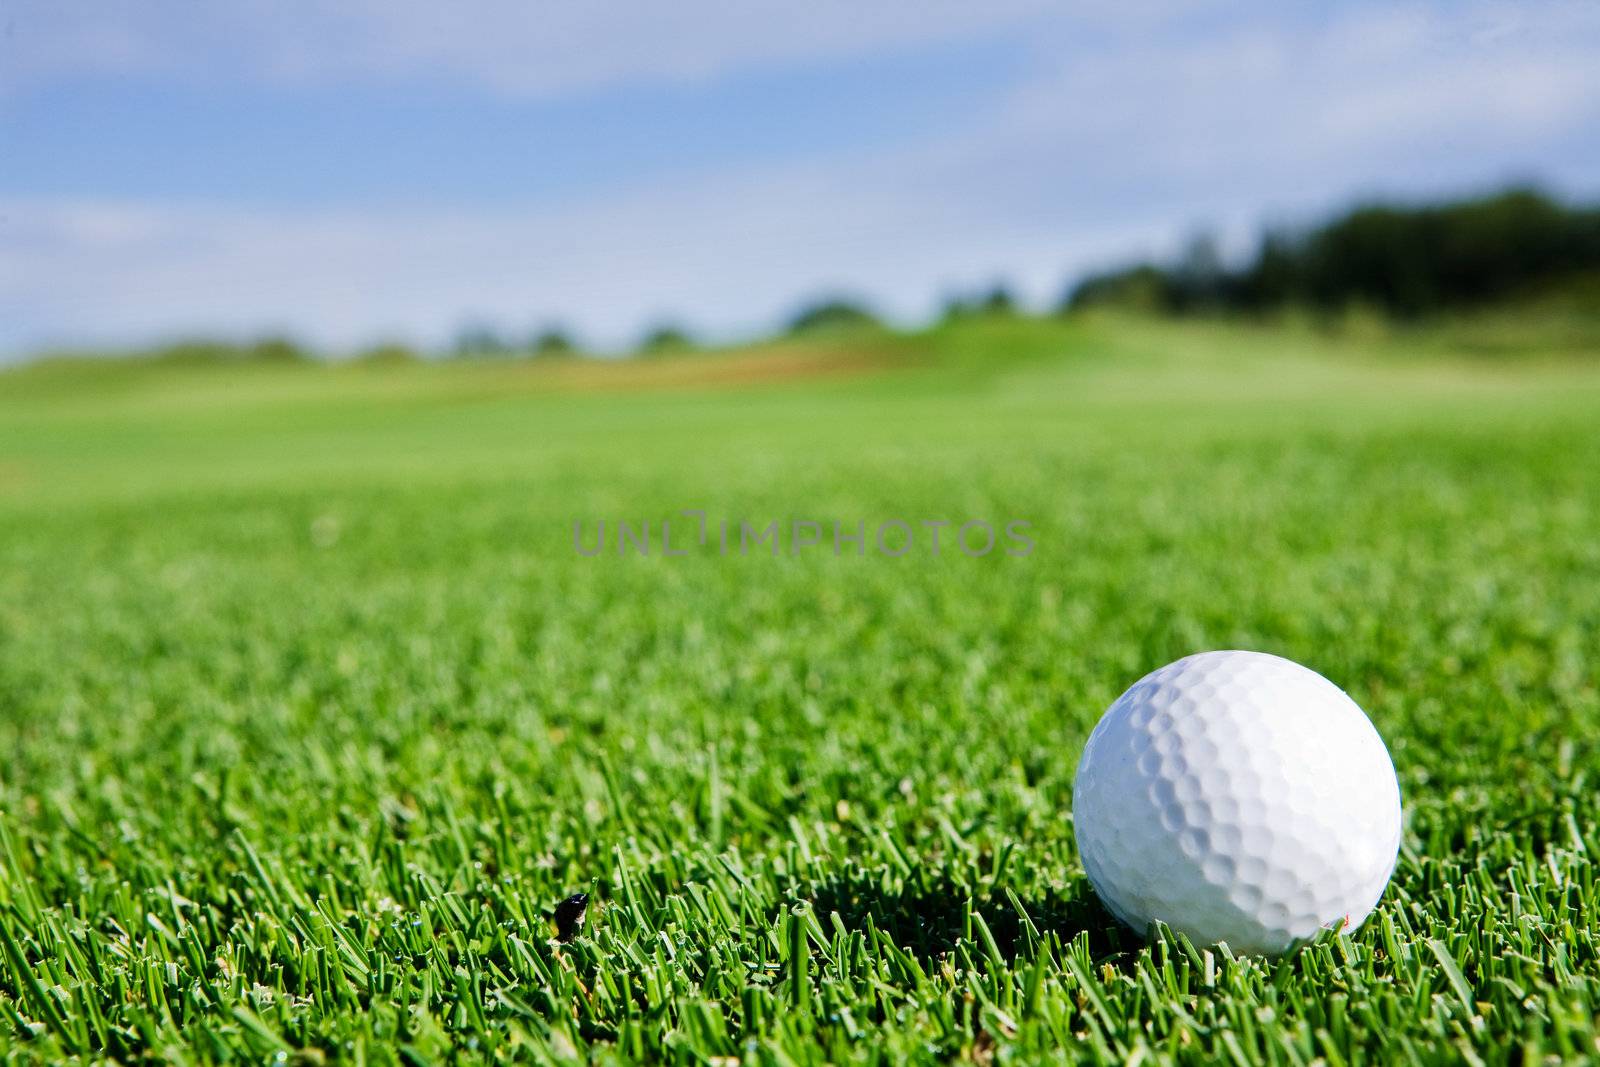 A golf ball sitting on a fairway